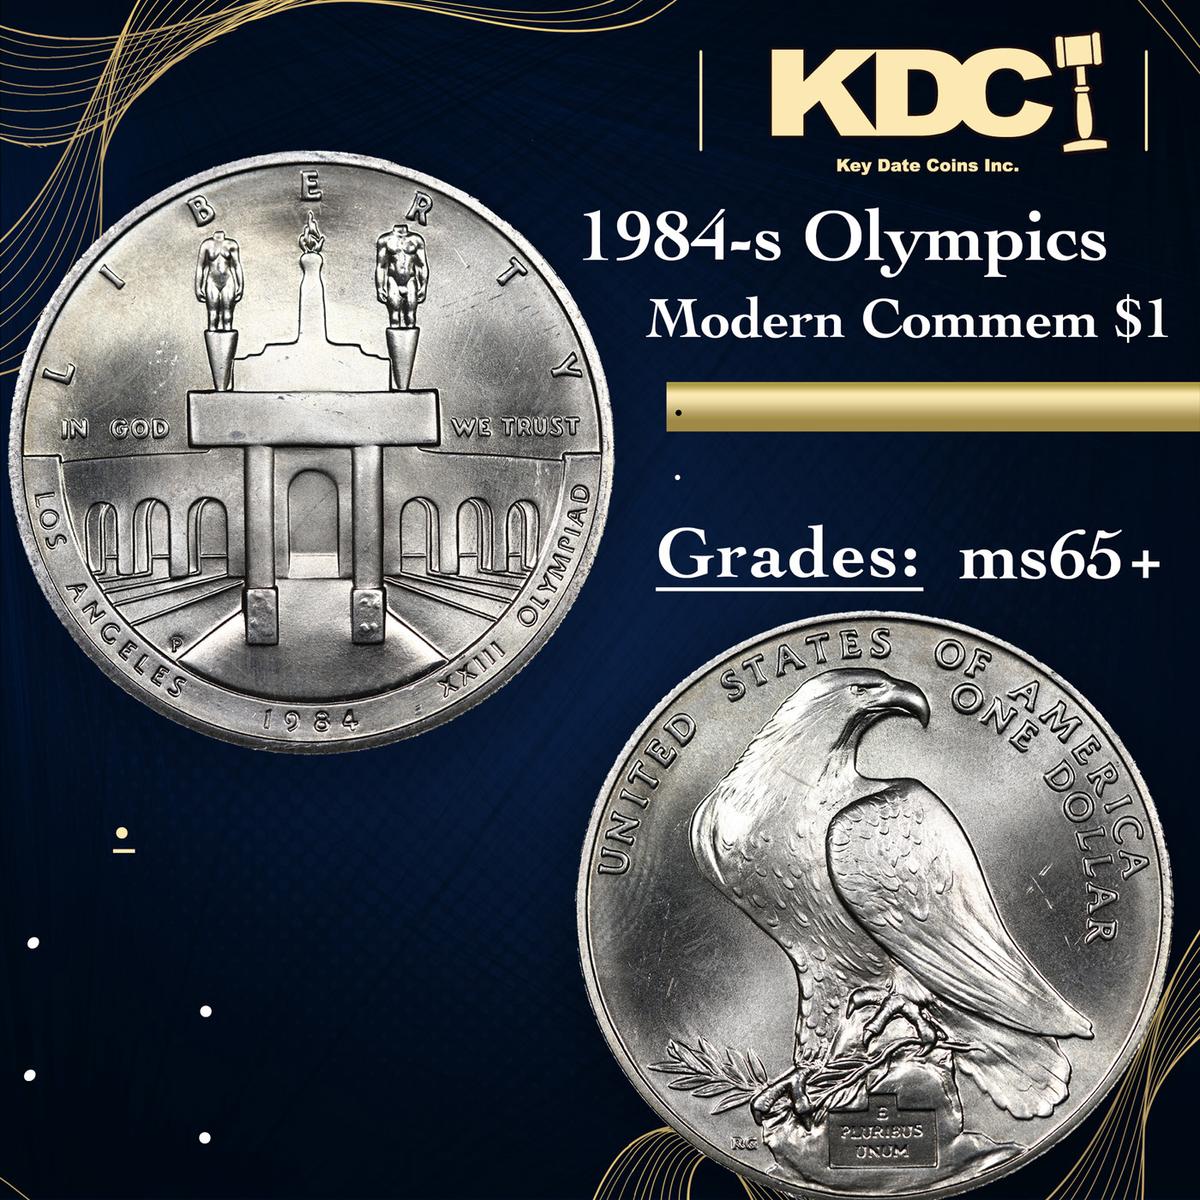 1984-s Olympics Modern Commem Dollar 1 Grades GEM+ Unc